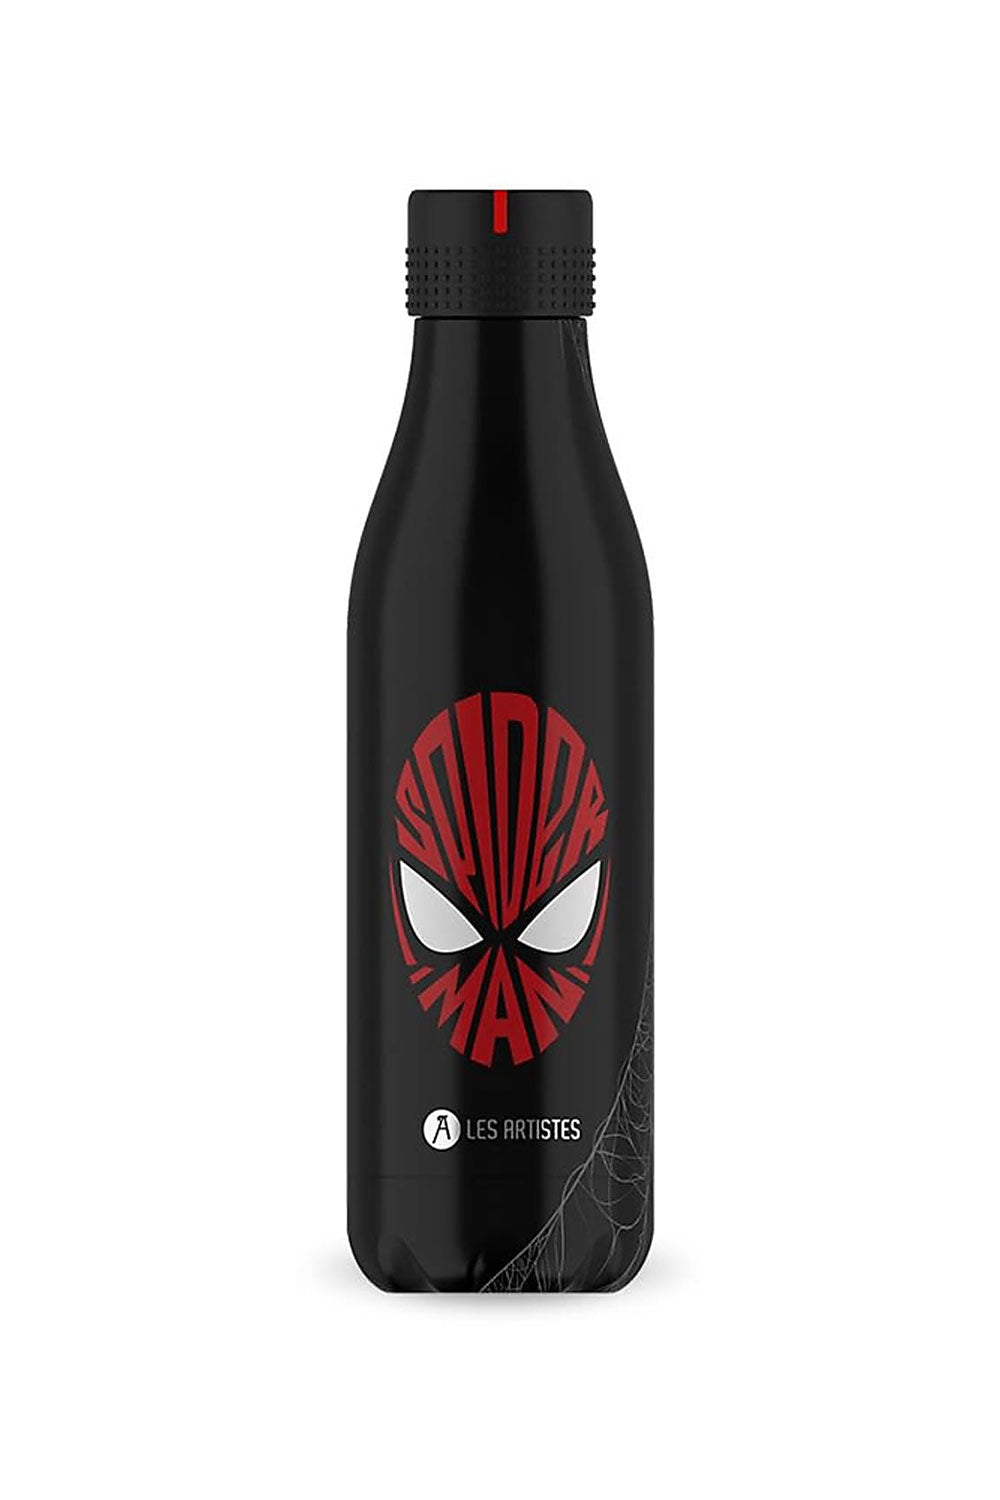 Spider Matt Bottle, 500ml - Maison7